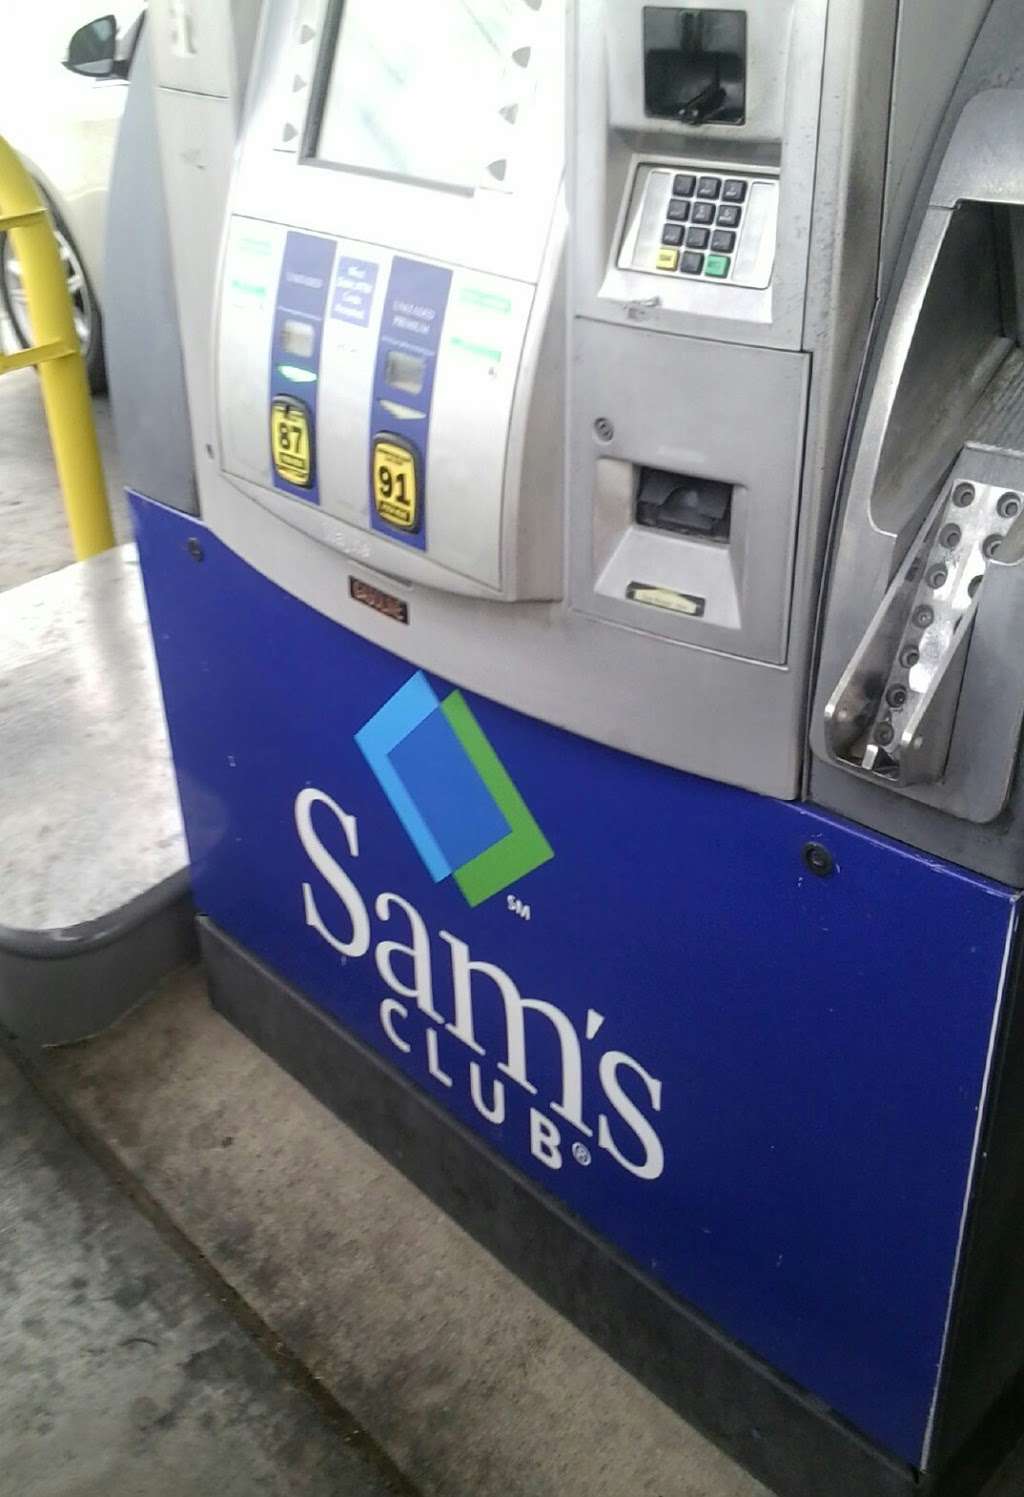 Sams Club Fuel Center | 7175 Spring Mountain Rd, Las Vegas, NV 89117, USA | Phone: (702) 253-0072